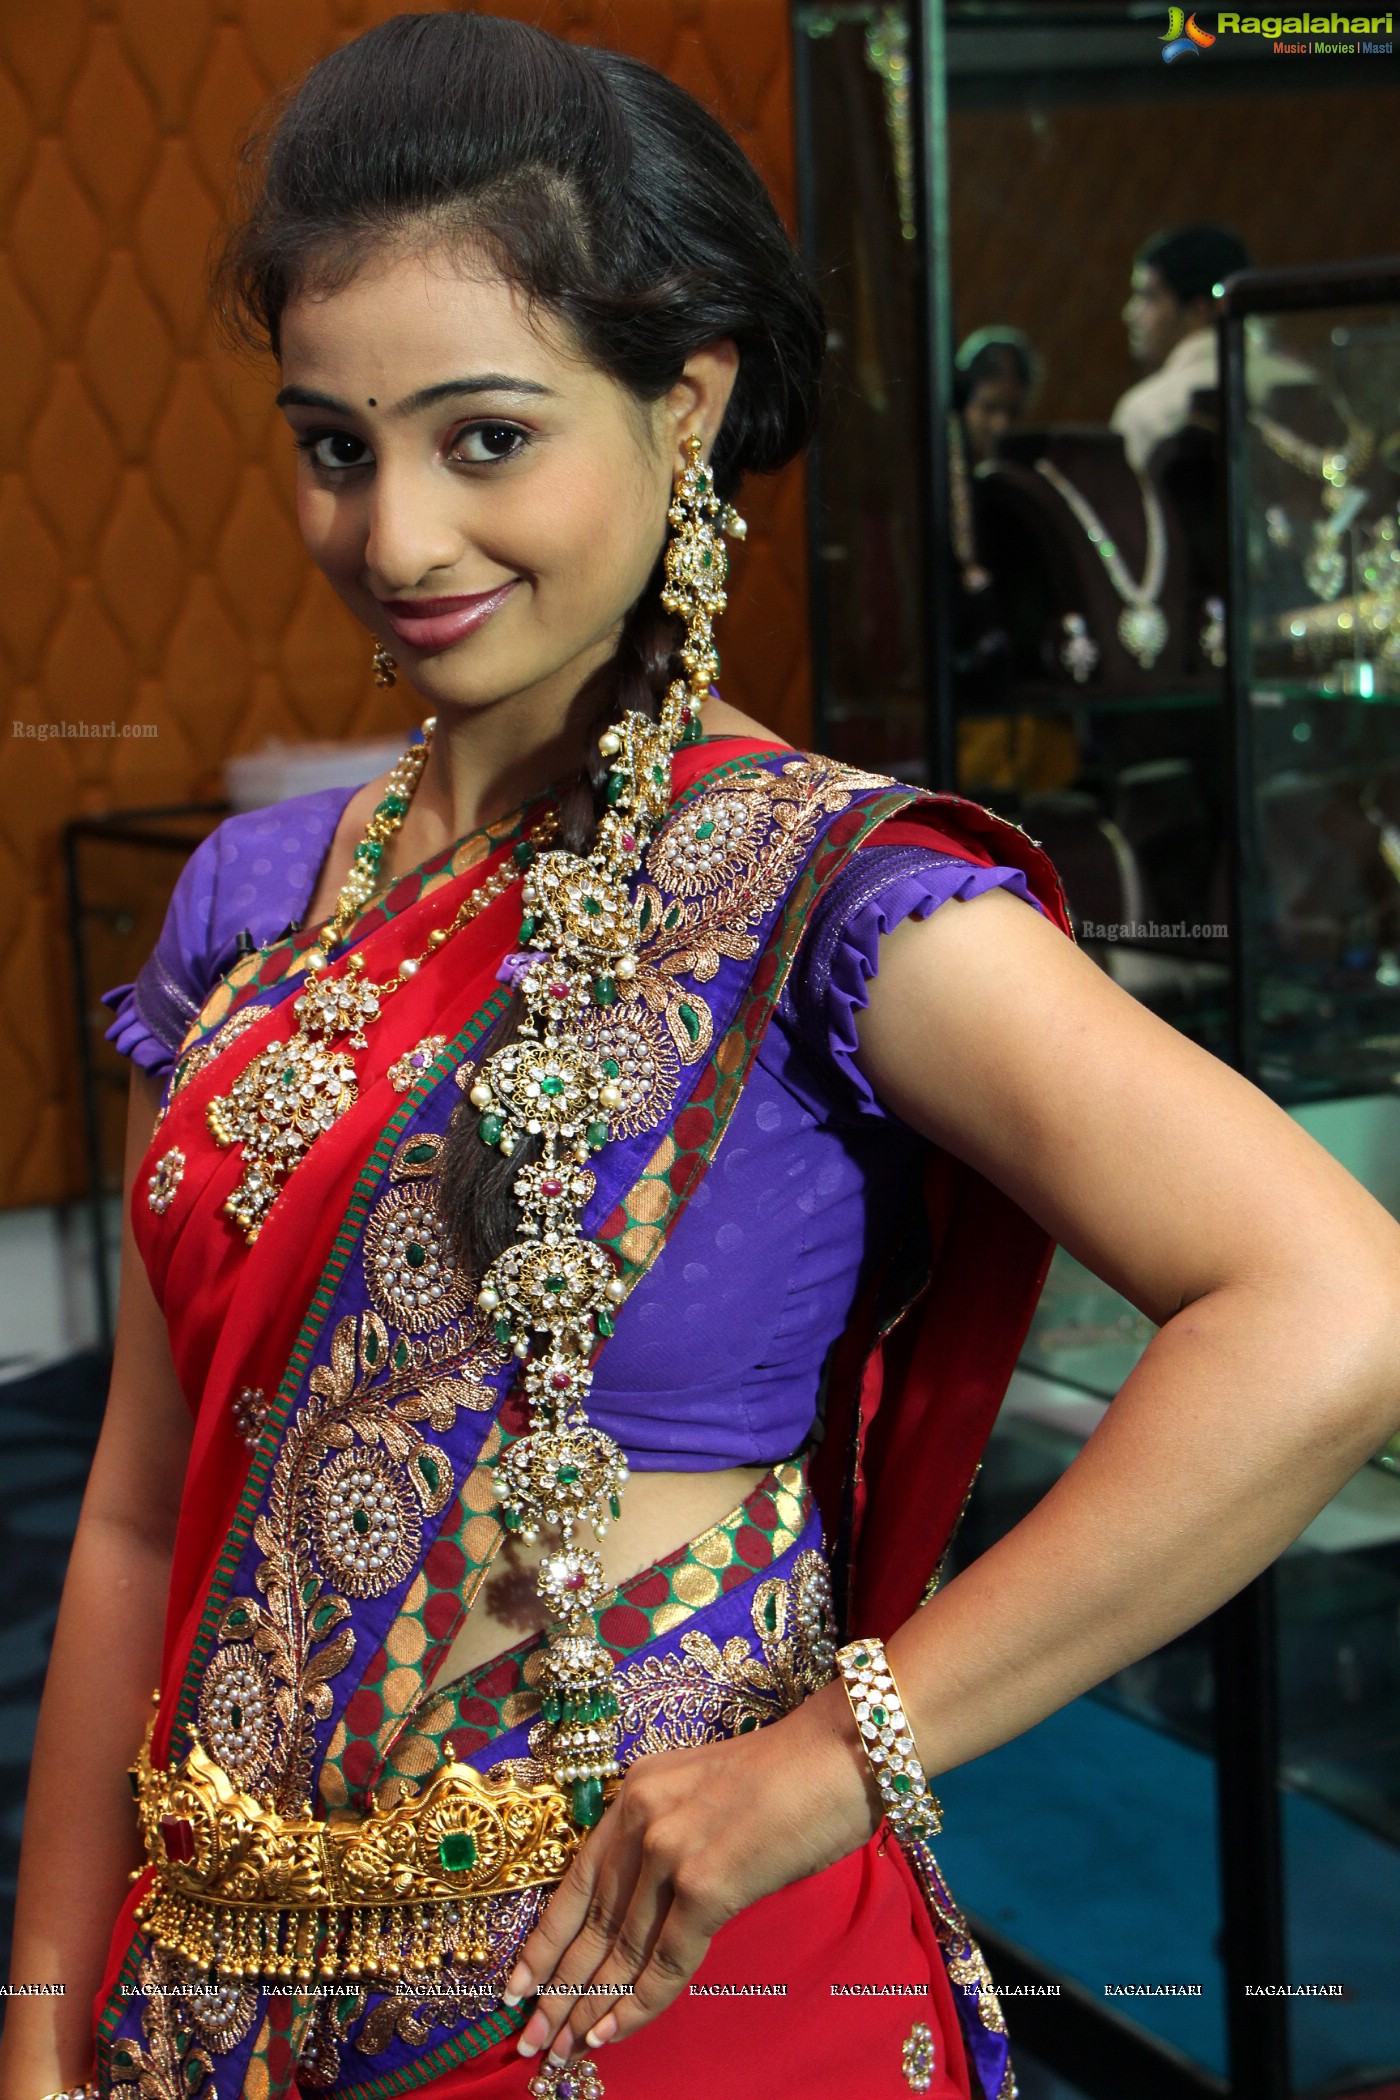 Vasundhara Diamond Roof - Wedding Jewellery Exhibition 2014 at Hotel Avasa, Hyderabad